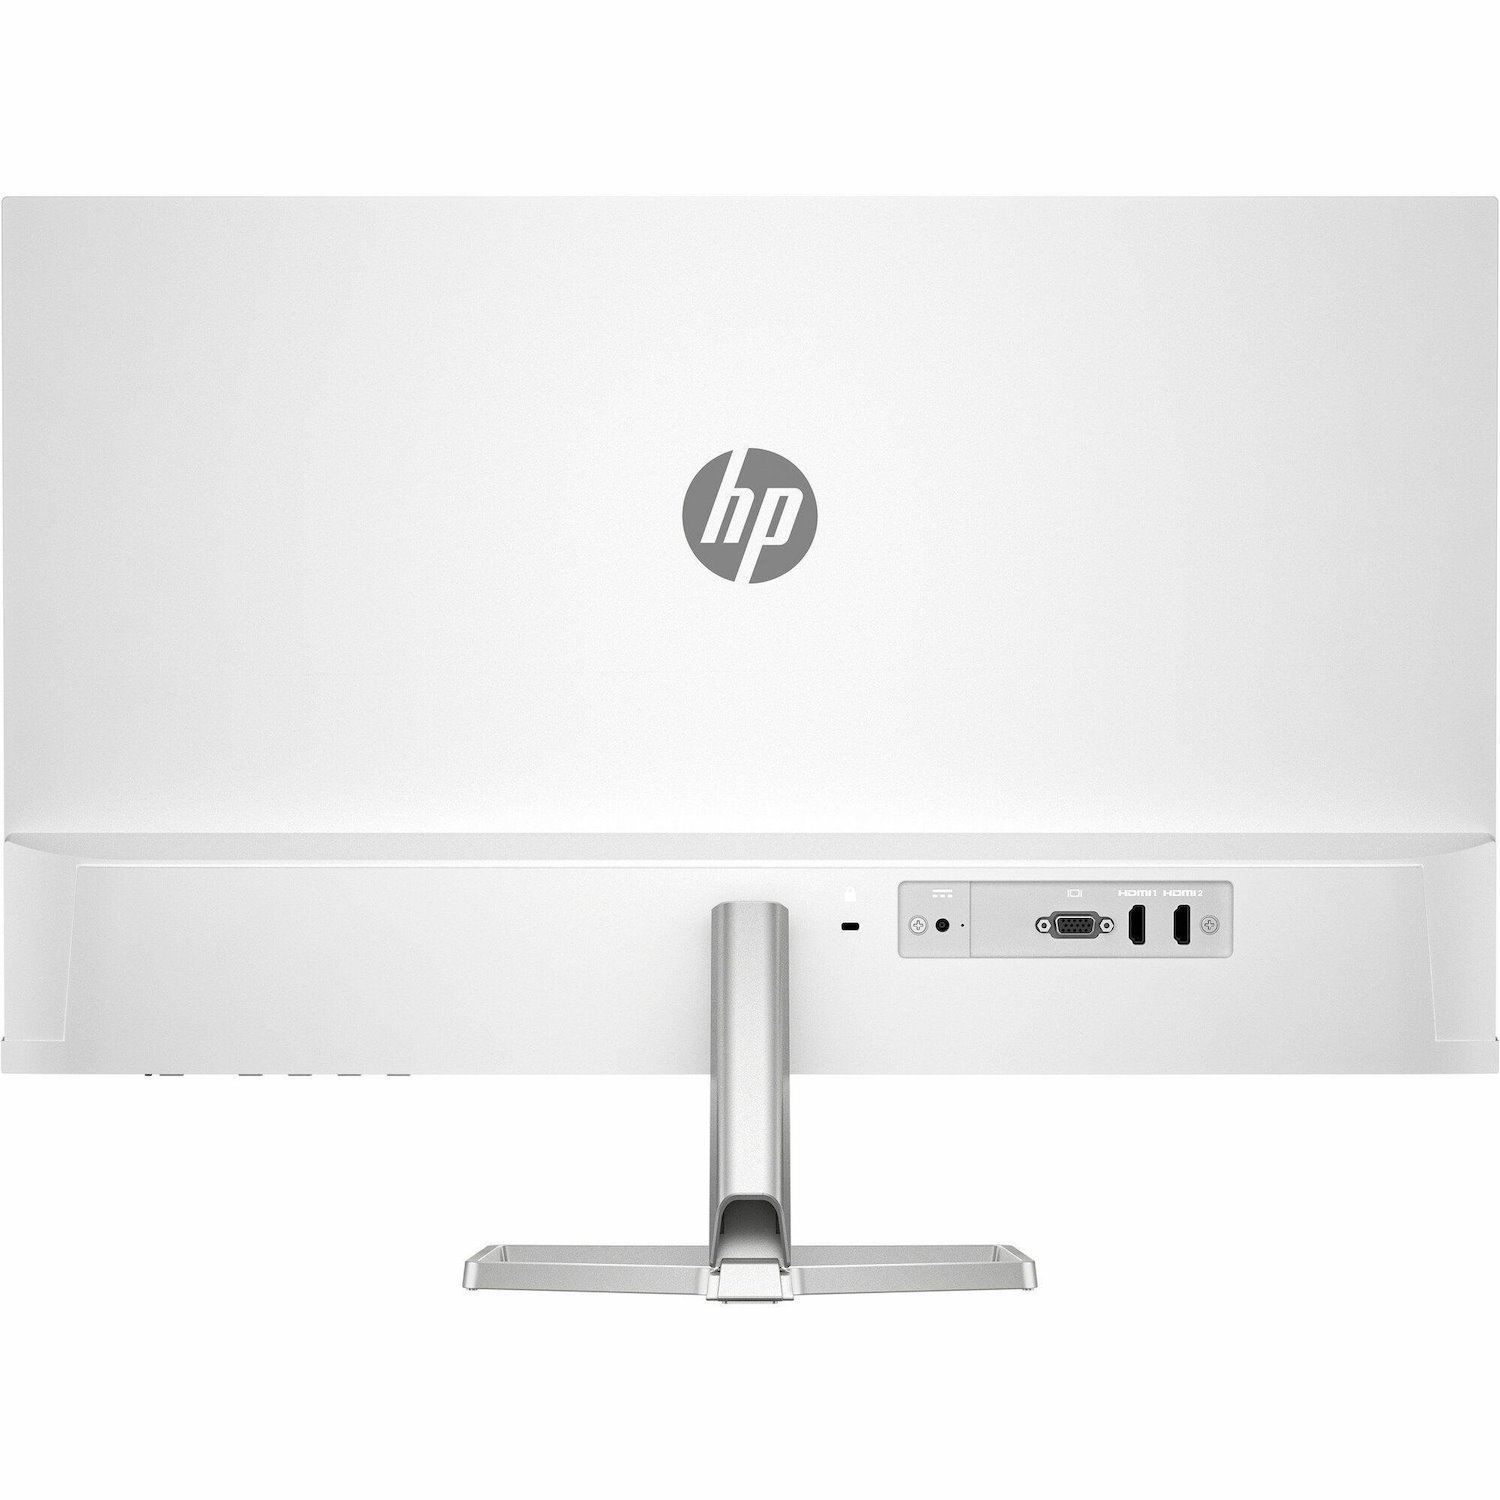 HP 527sw 27" Class Full HD LED Monitor - 16:9 - White